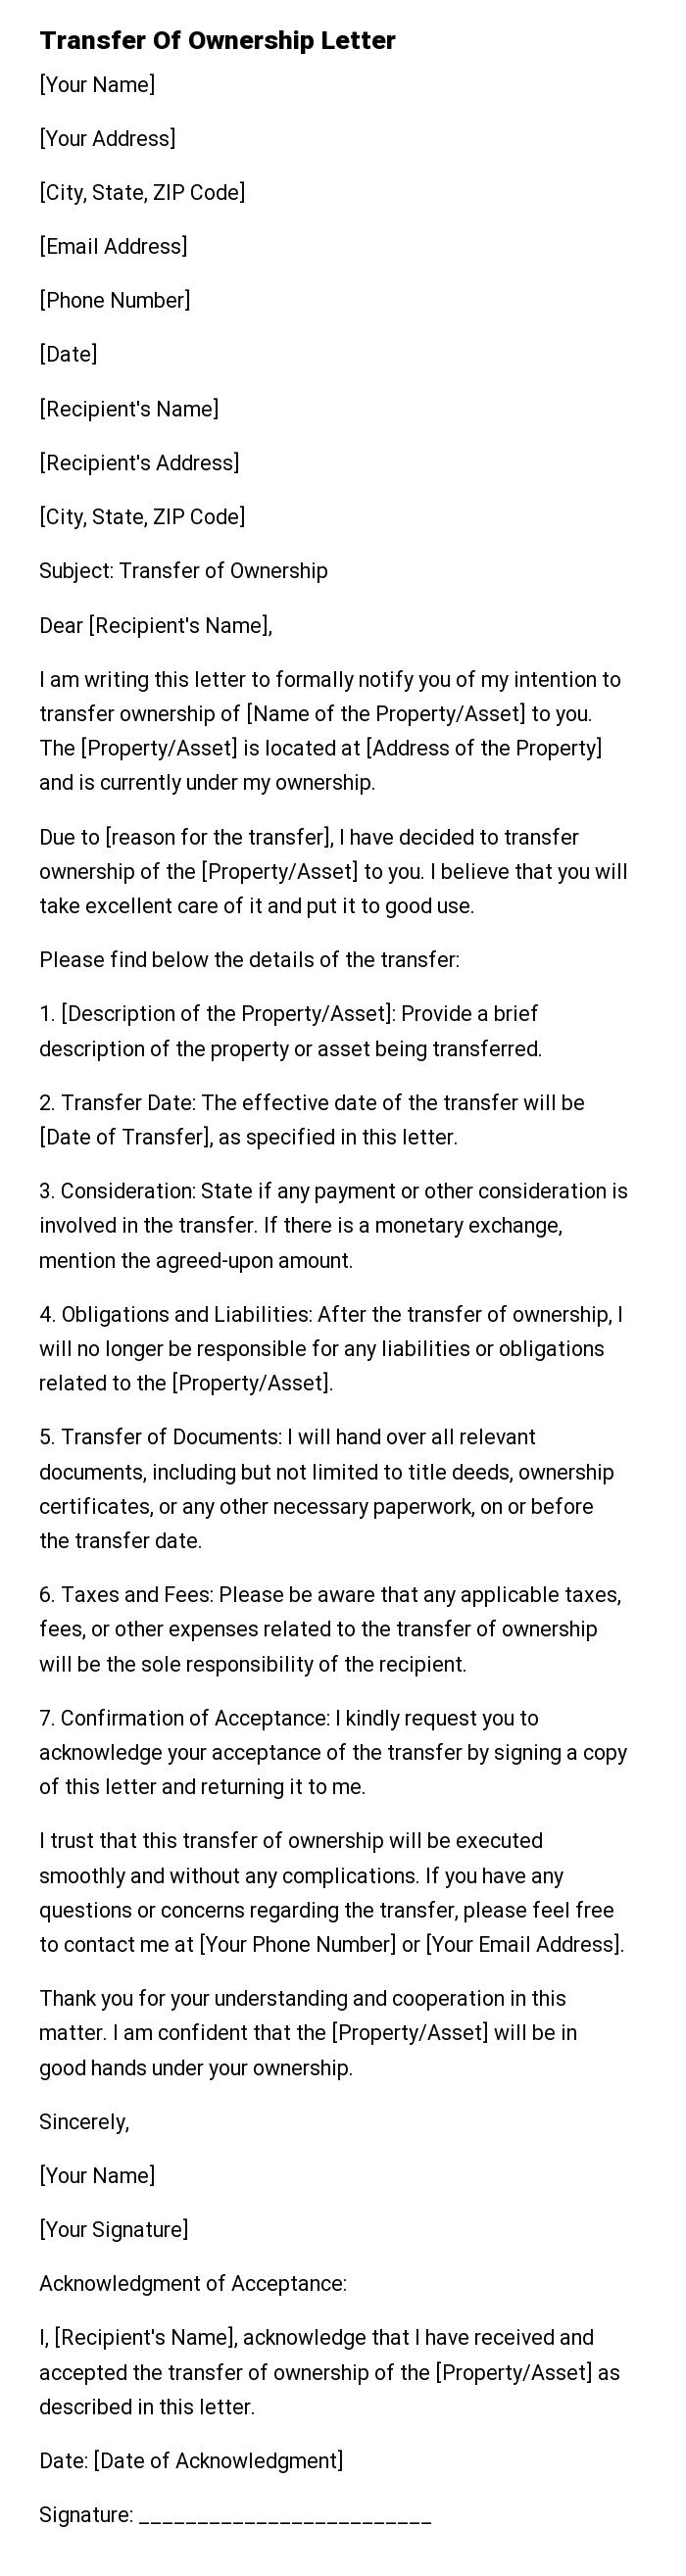 Transfer Of Ownership Letter